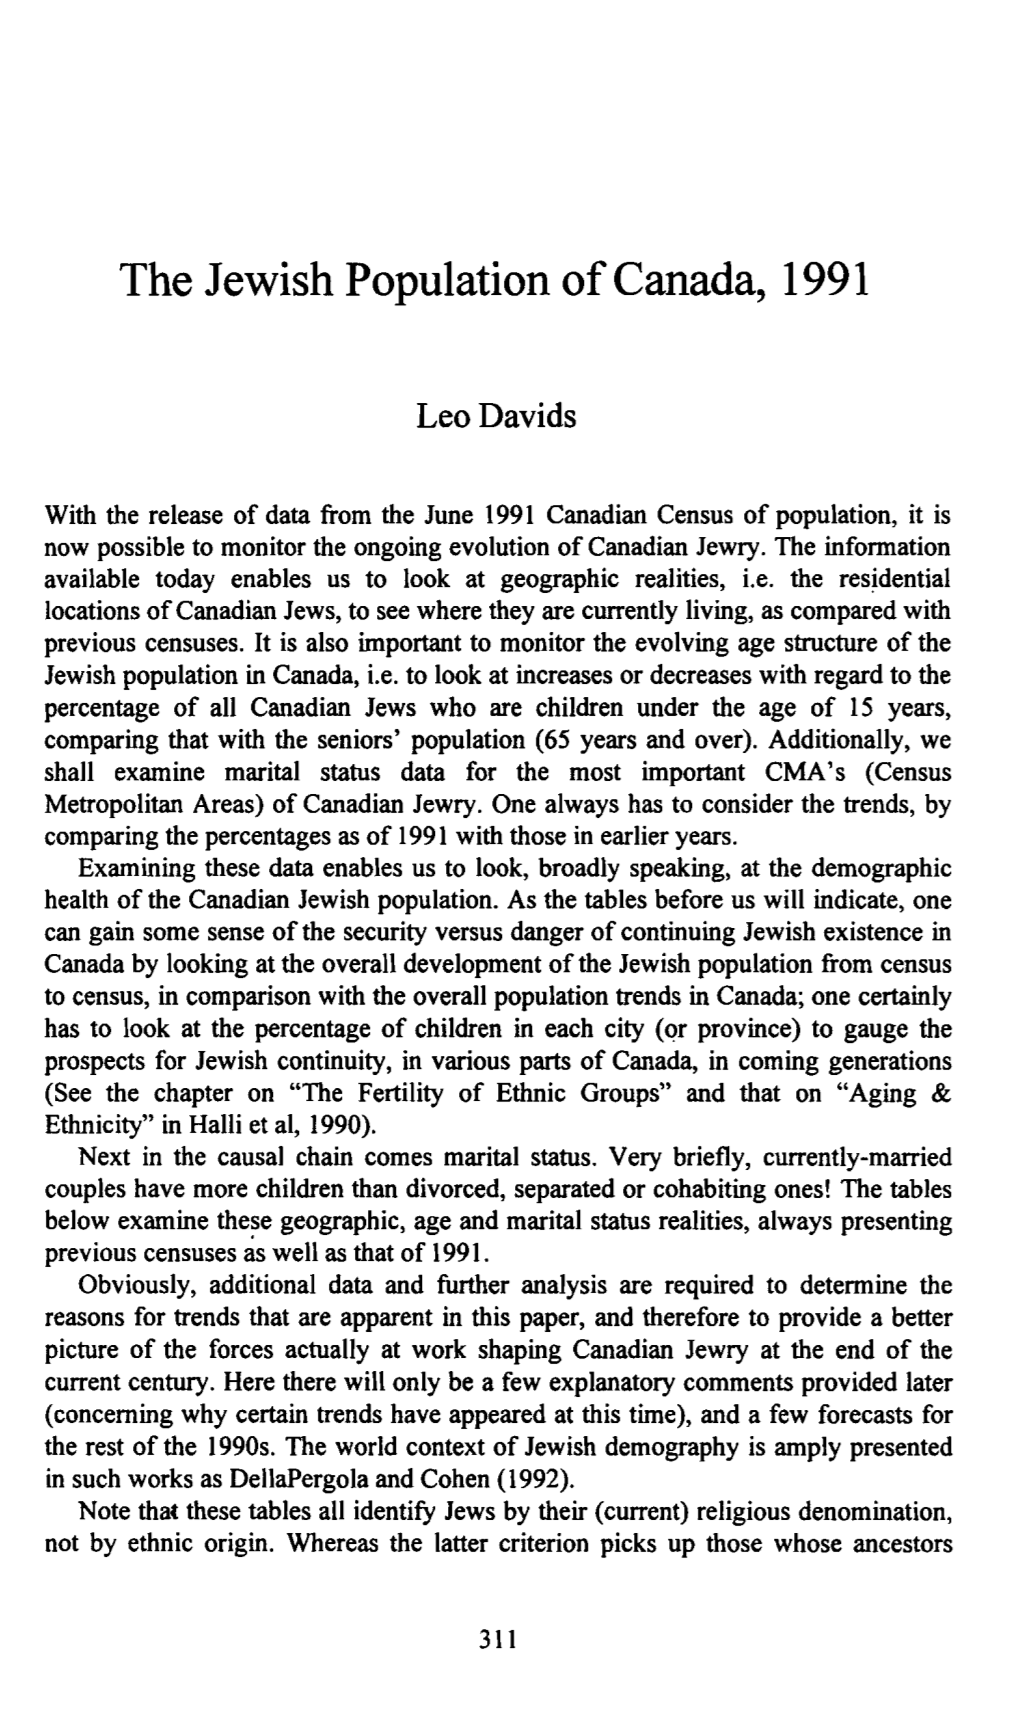 The Jewish Population of Canada, 1991